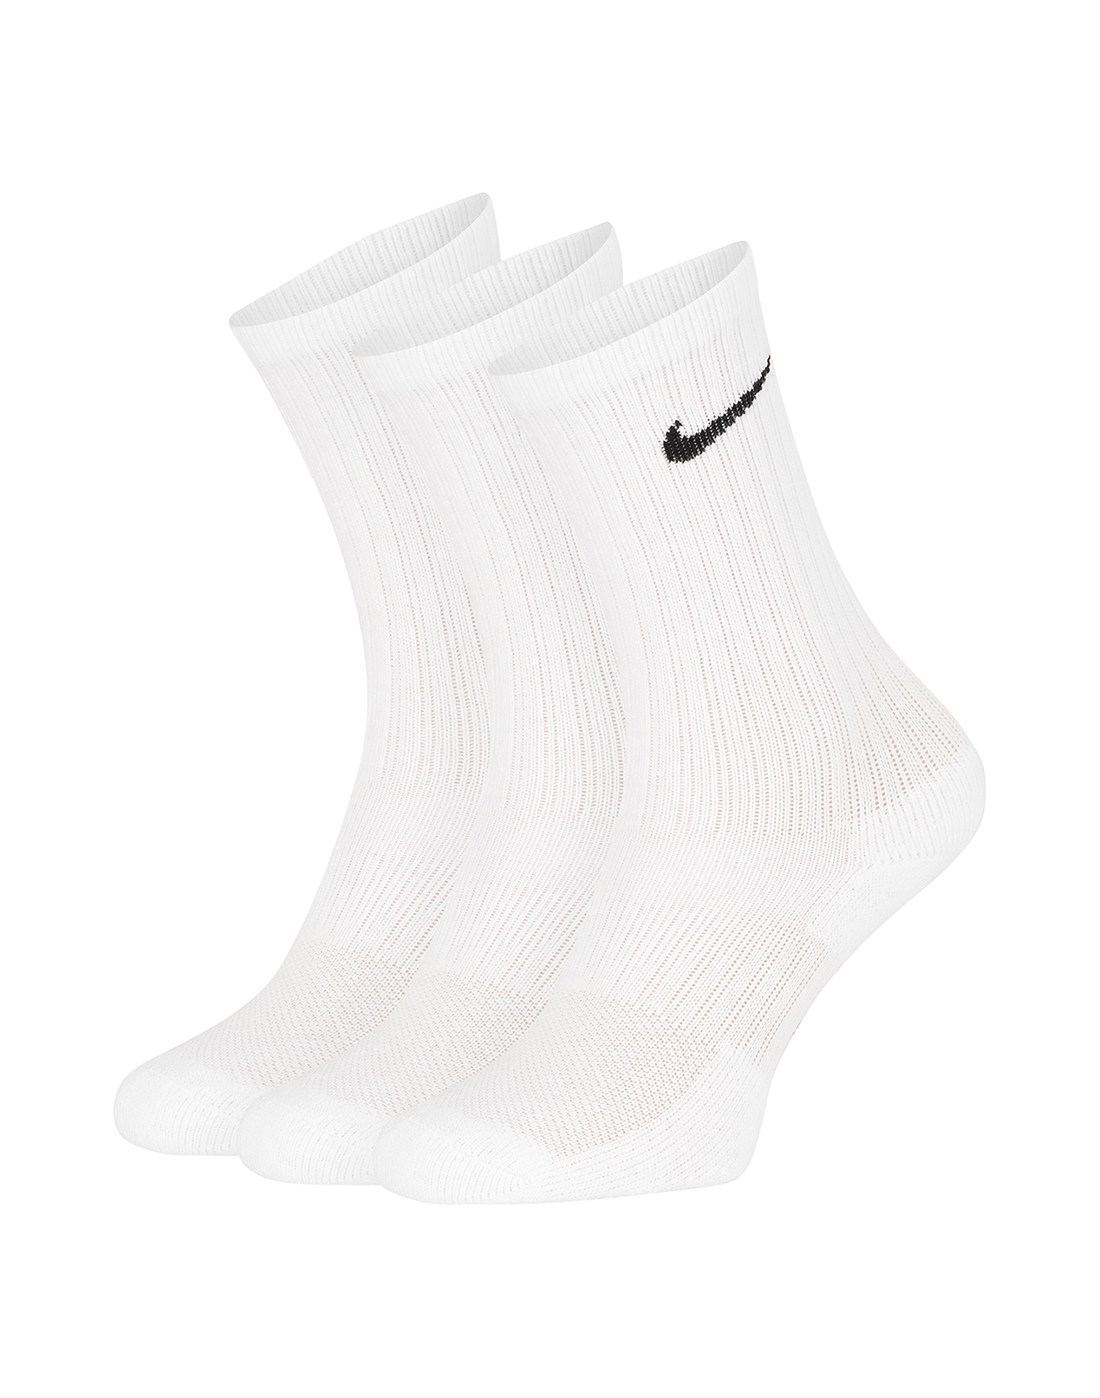 Nike Kids Cushioned Crew 3 Pack Socks - White | Life Style Sports UK